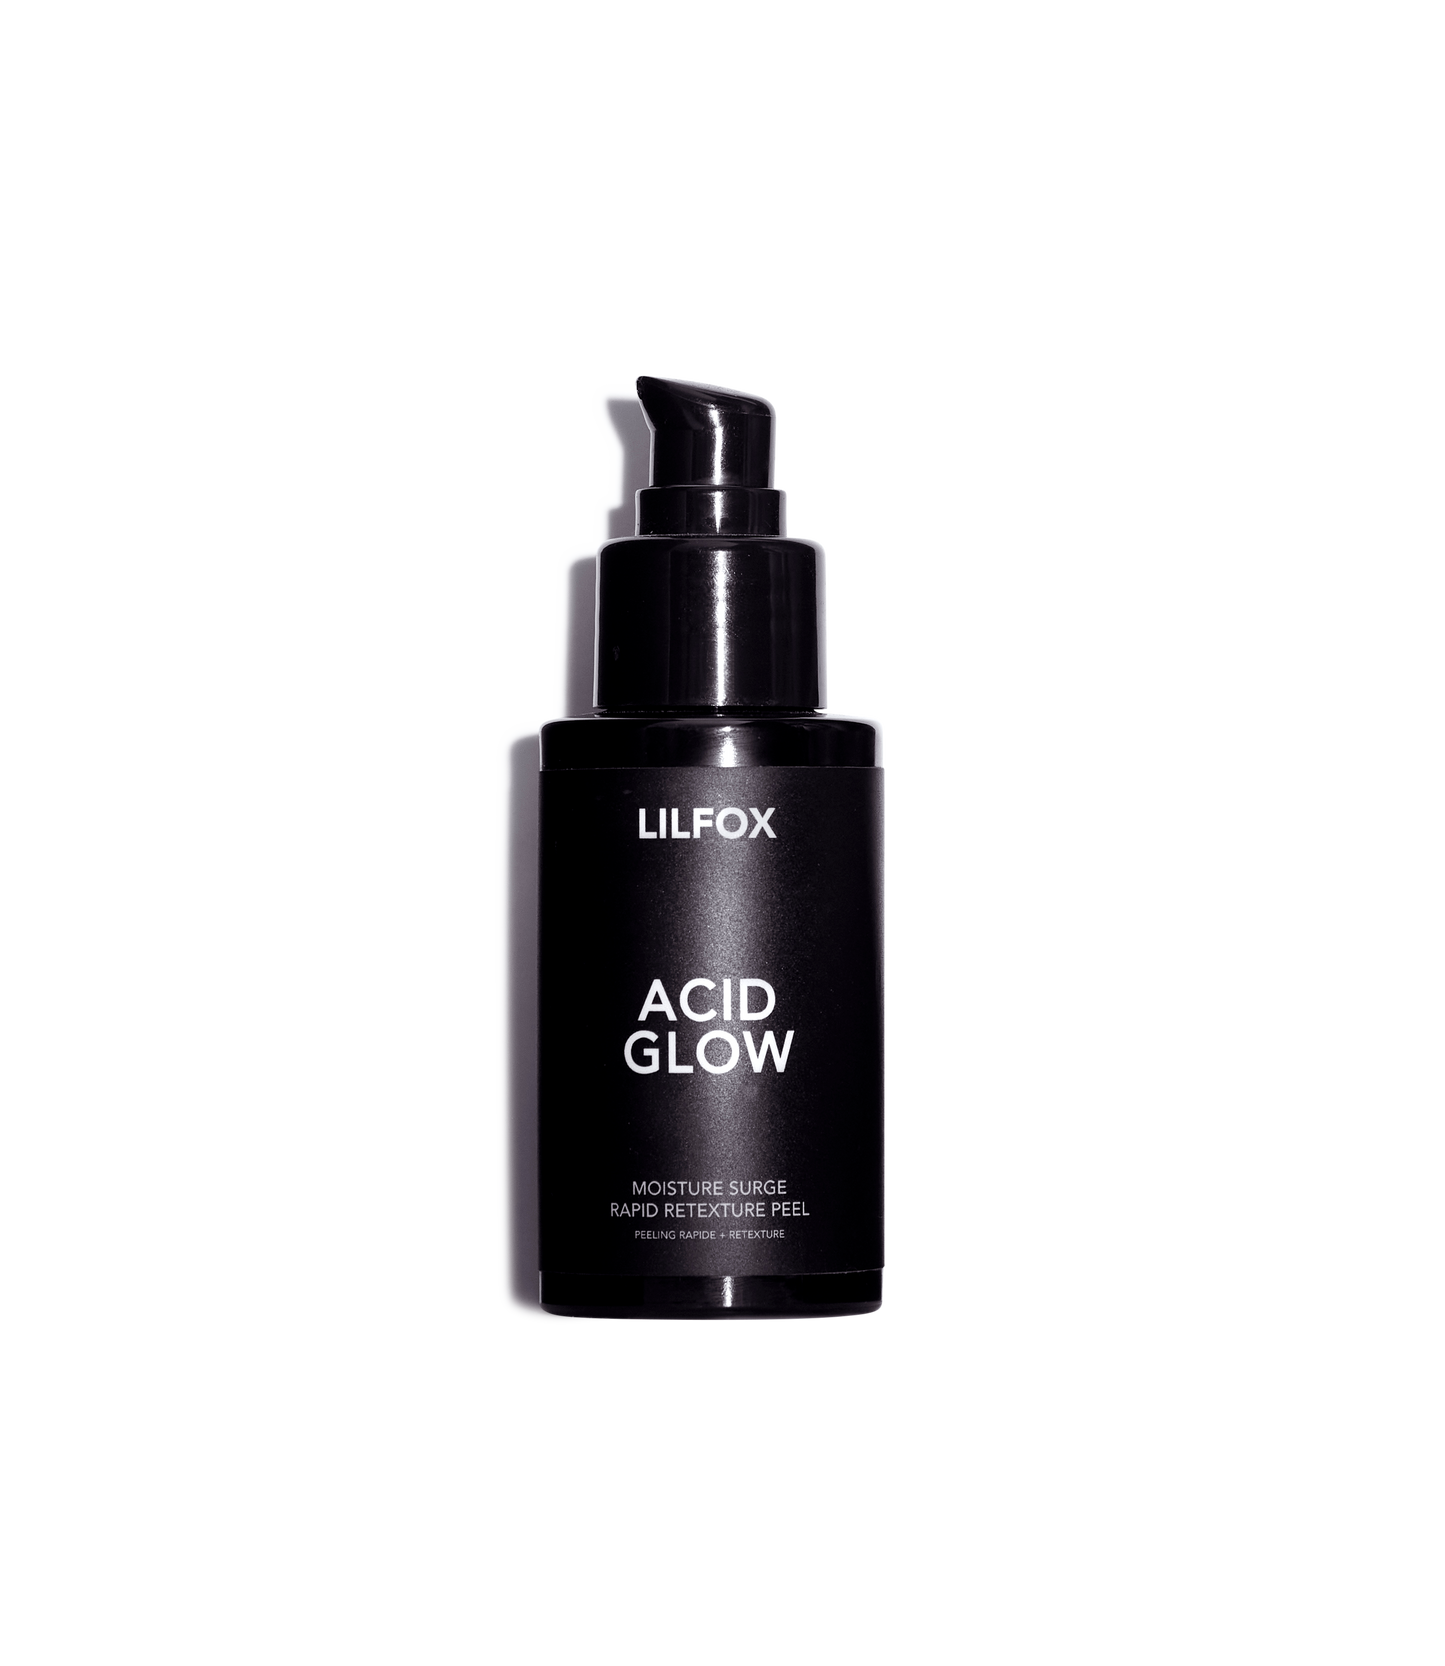 LILFOX Acid Glow Rapid Retexture Peel